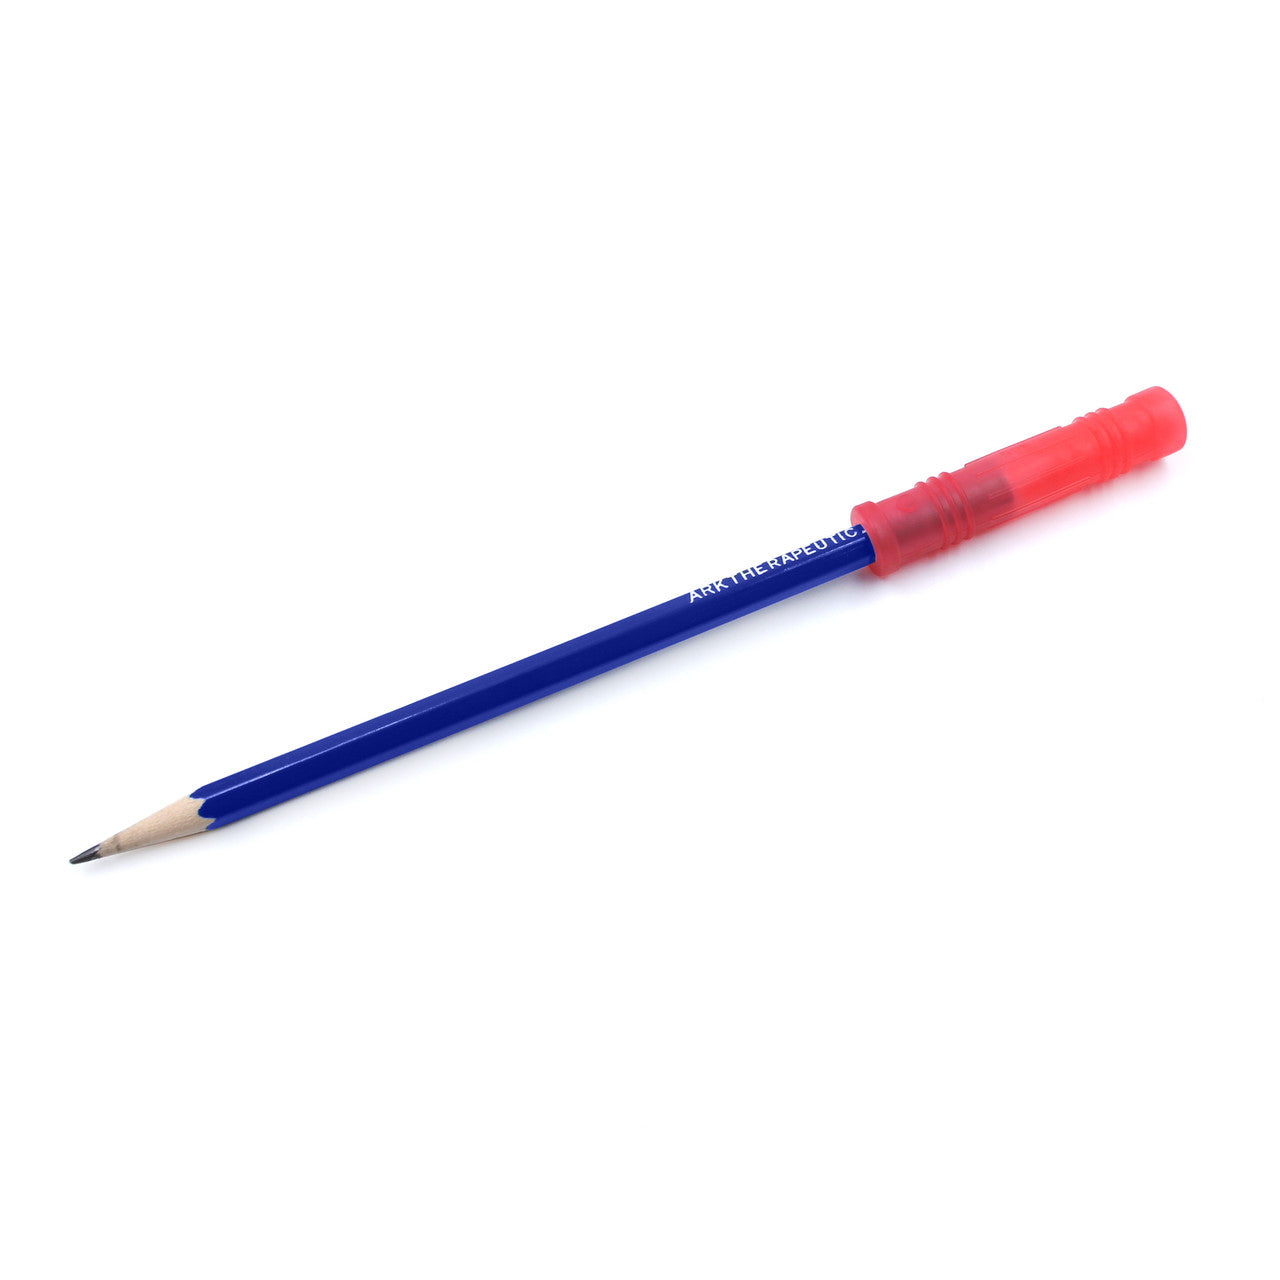 ARK's Bite Saber® Chewable Pencil Topper